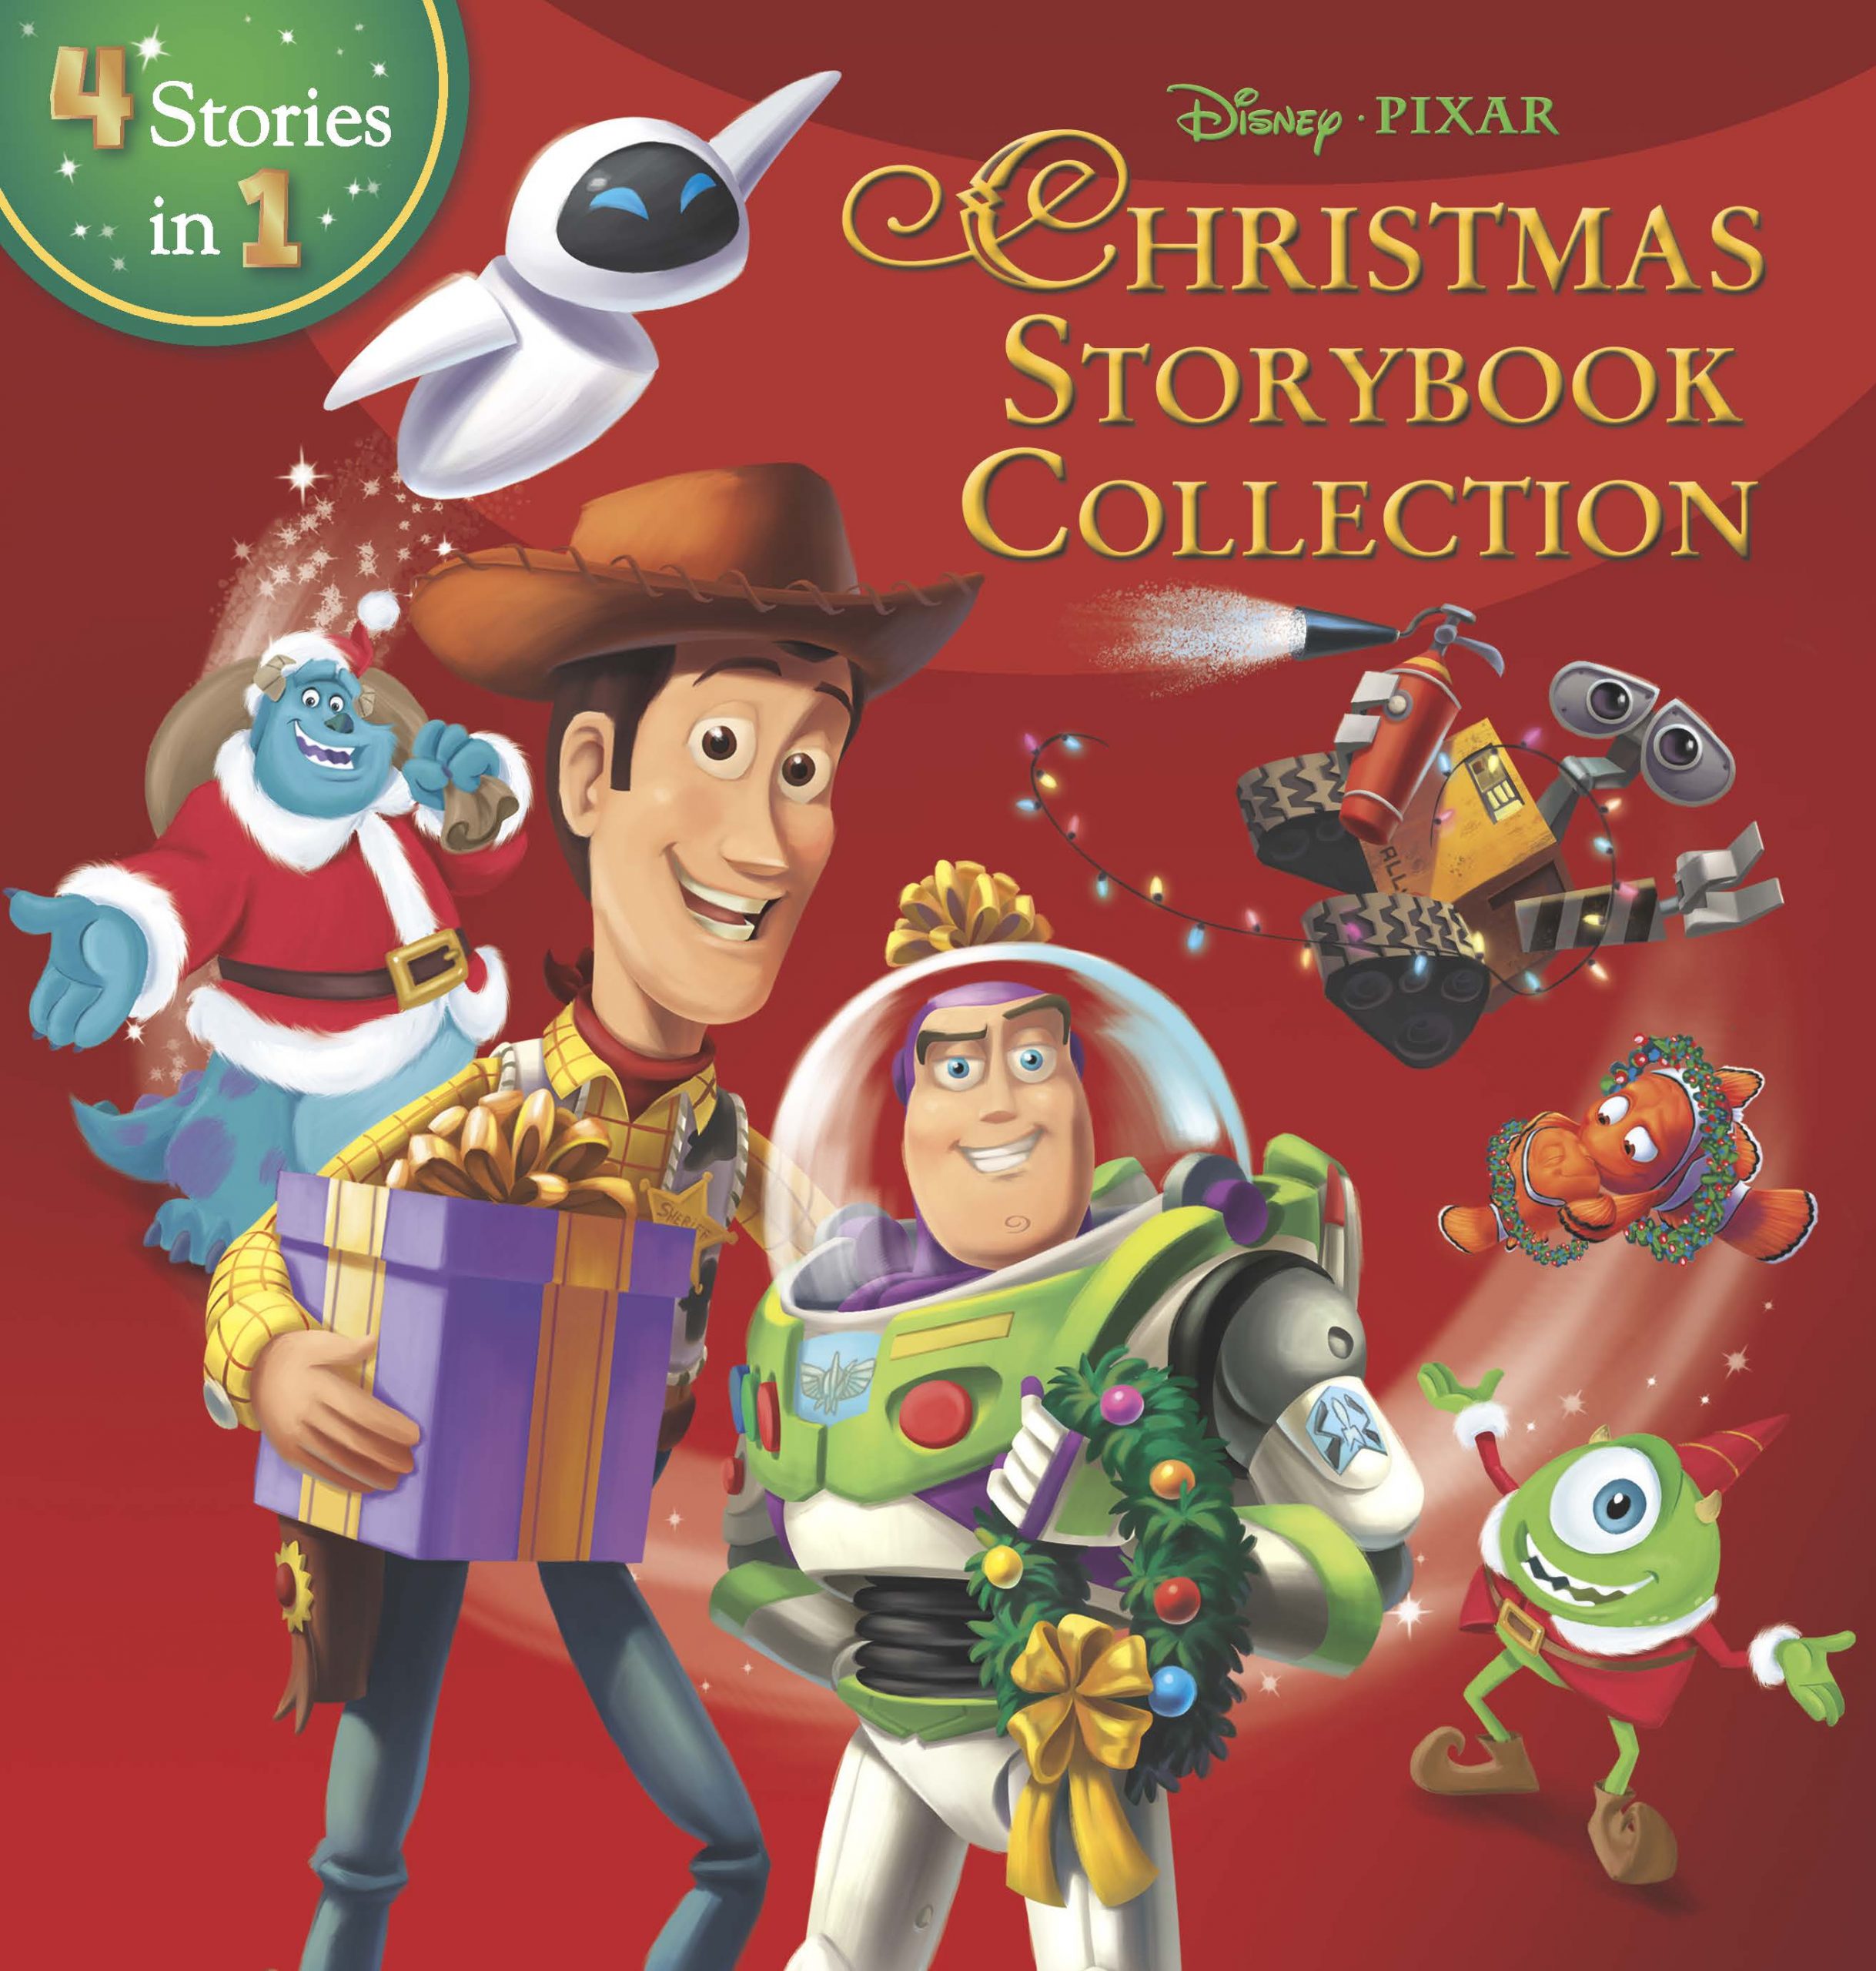 Disney*Pixar Christmas Storybook Collection 4 Stories in 1 by - Disney-Pixar  Books